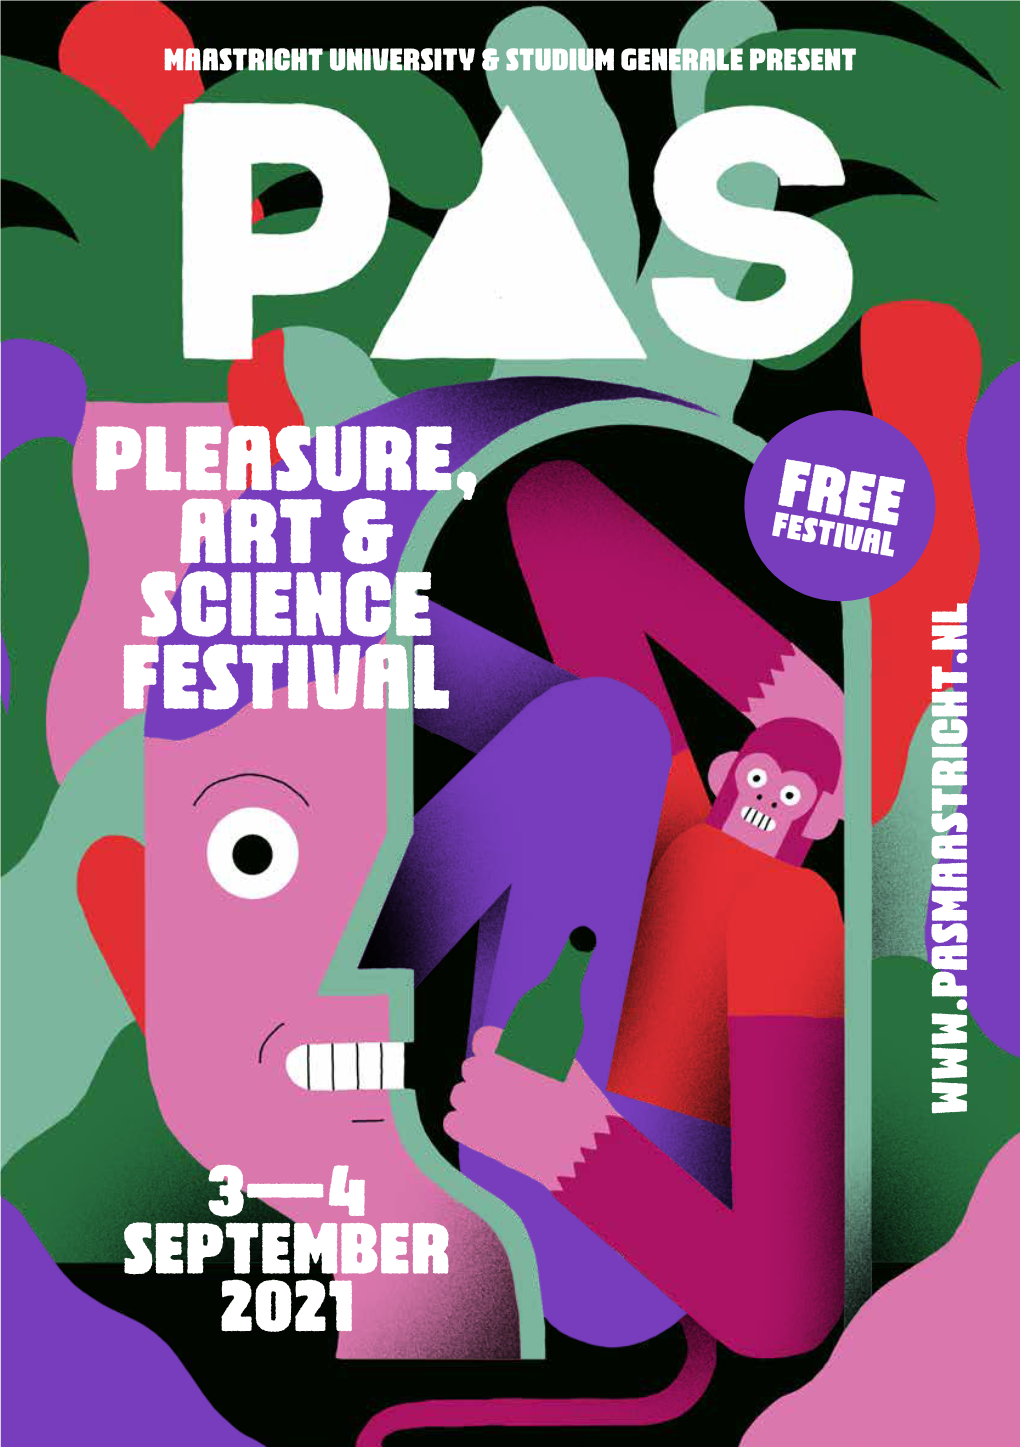 Pleasure, Art & Science Festival